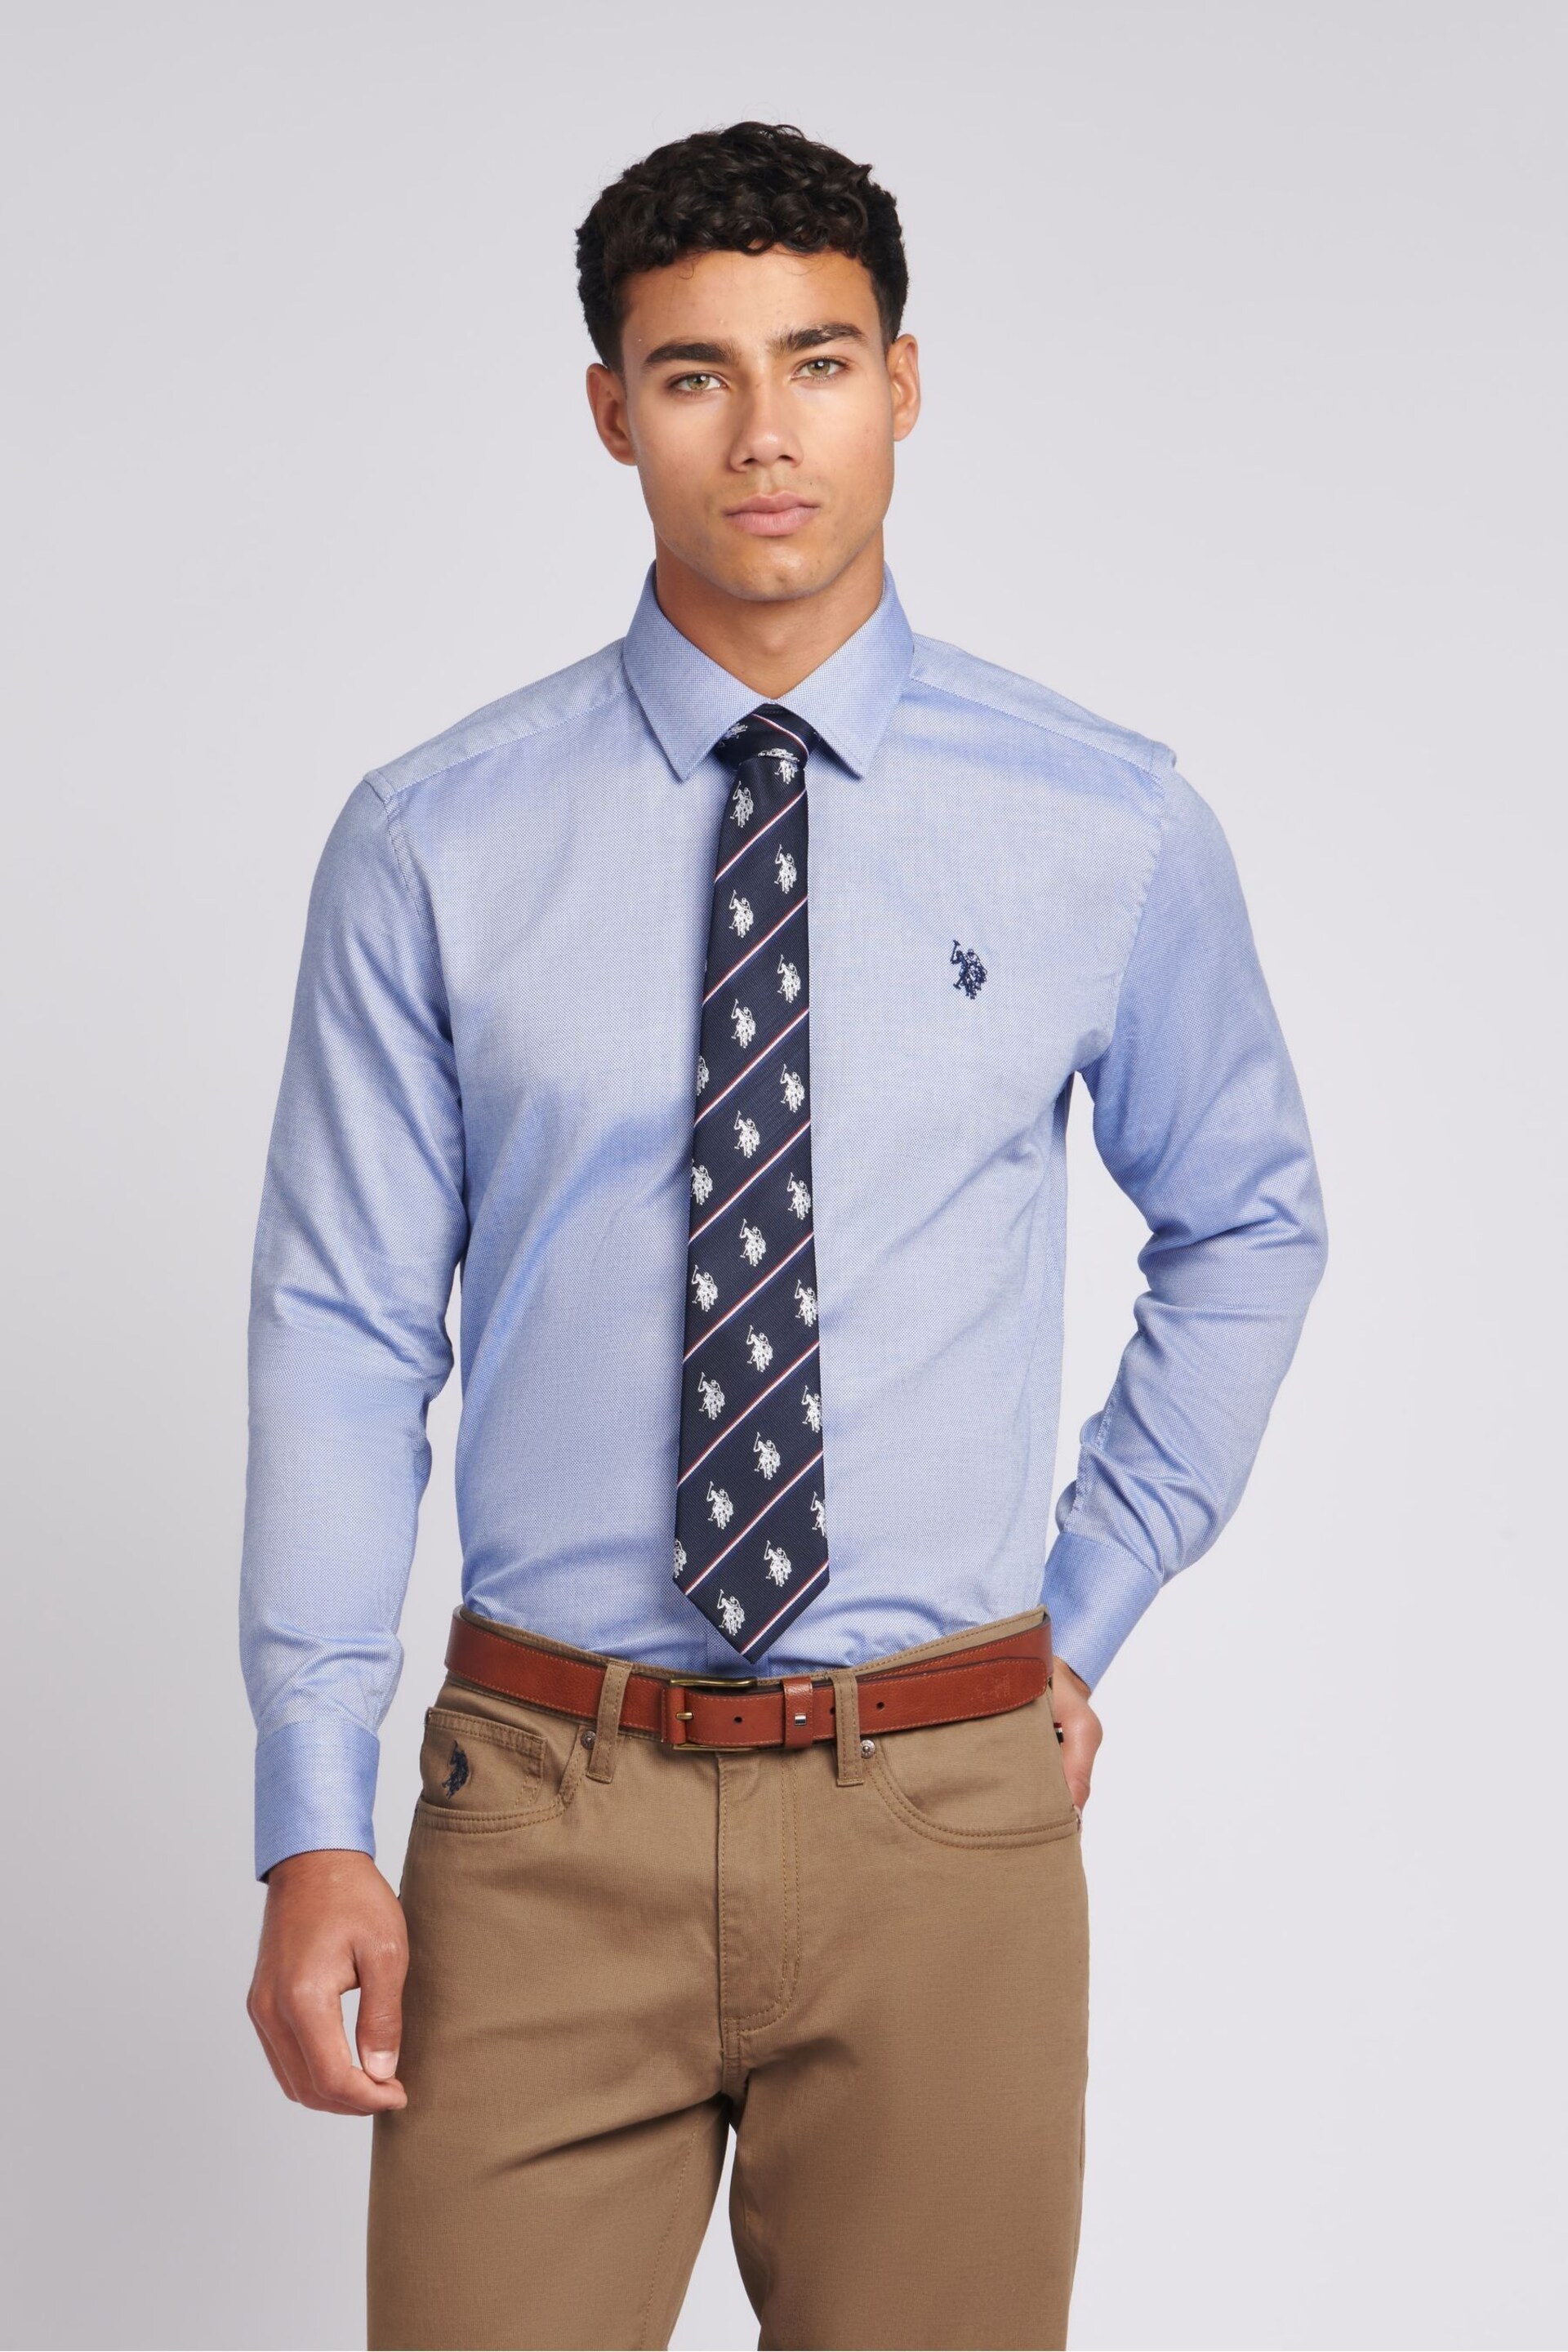 U.S. Polo Assn. Mens Blue Long Sleeve Dobby Texture Shirt - Image 1 of 7